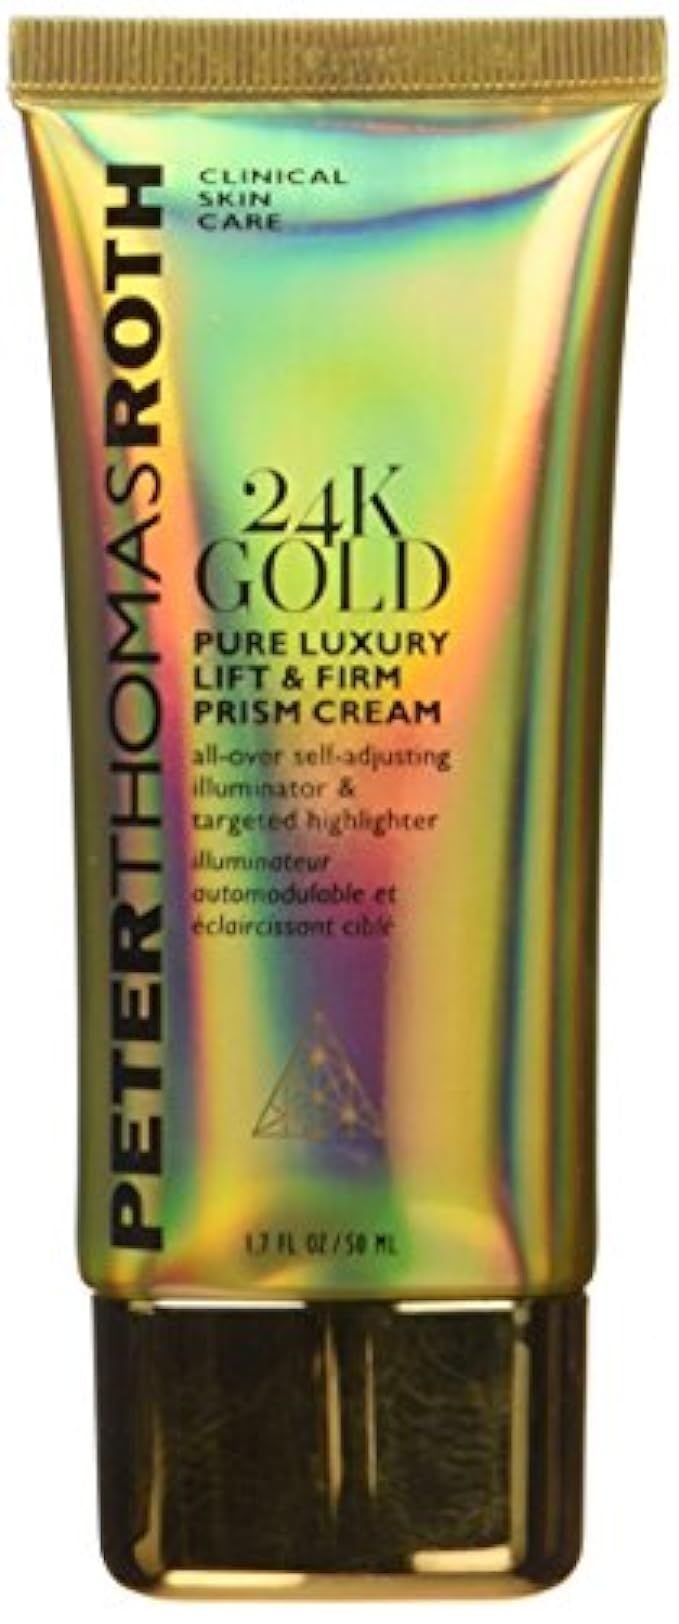 Peter Thomas Roth 24K Gold Pure Luxury Lift & Firm Prism Cream - 1.7 FL OZ | Amazon (US)